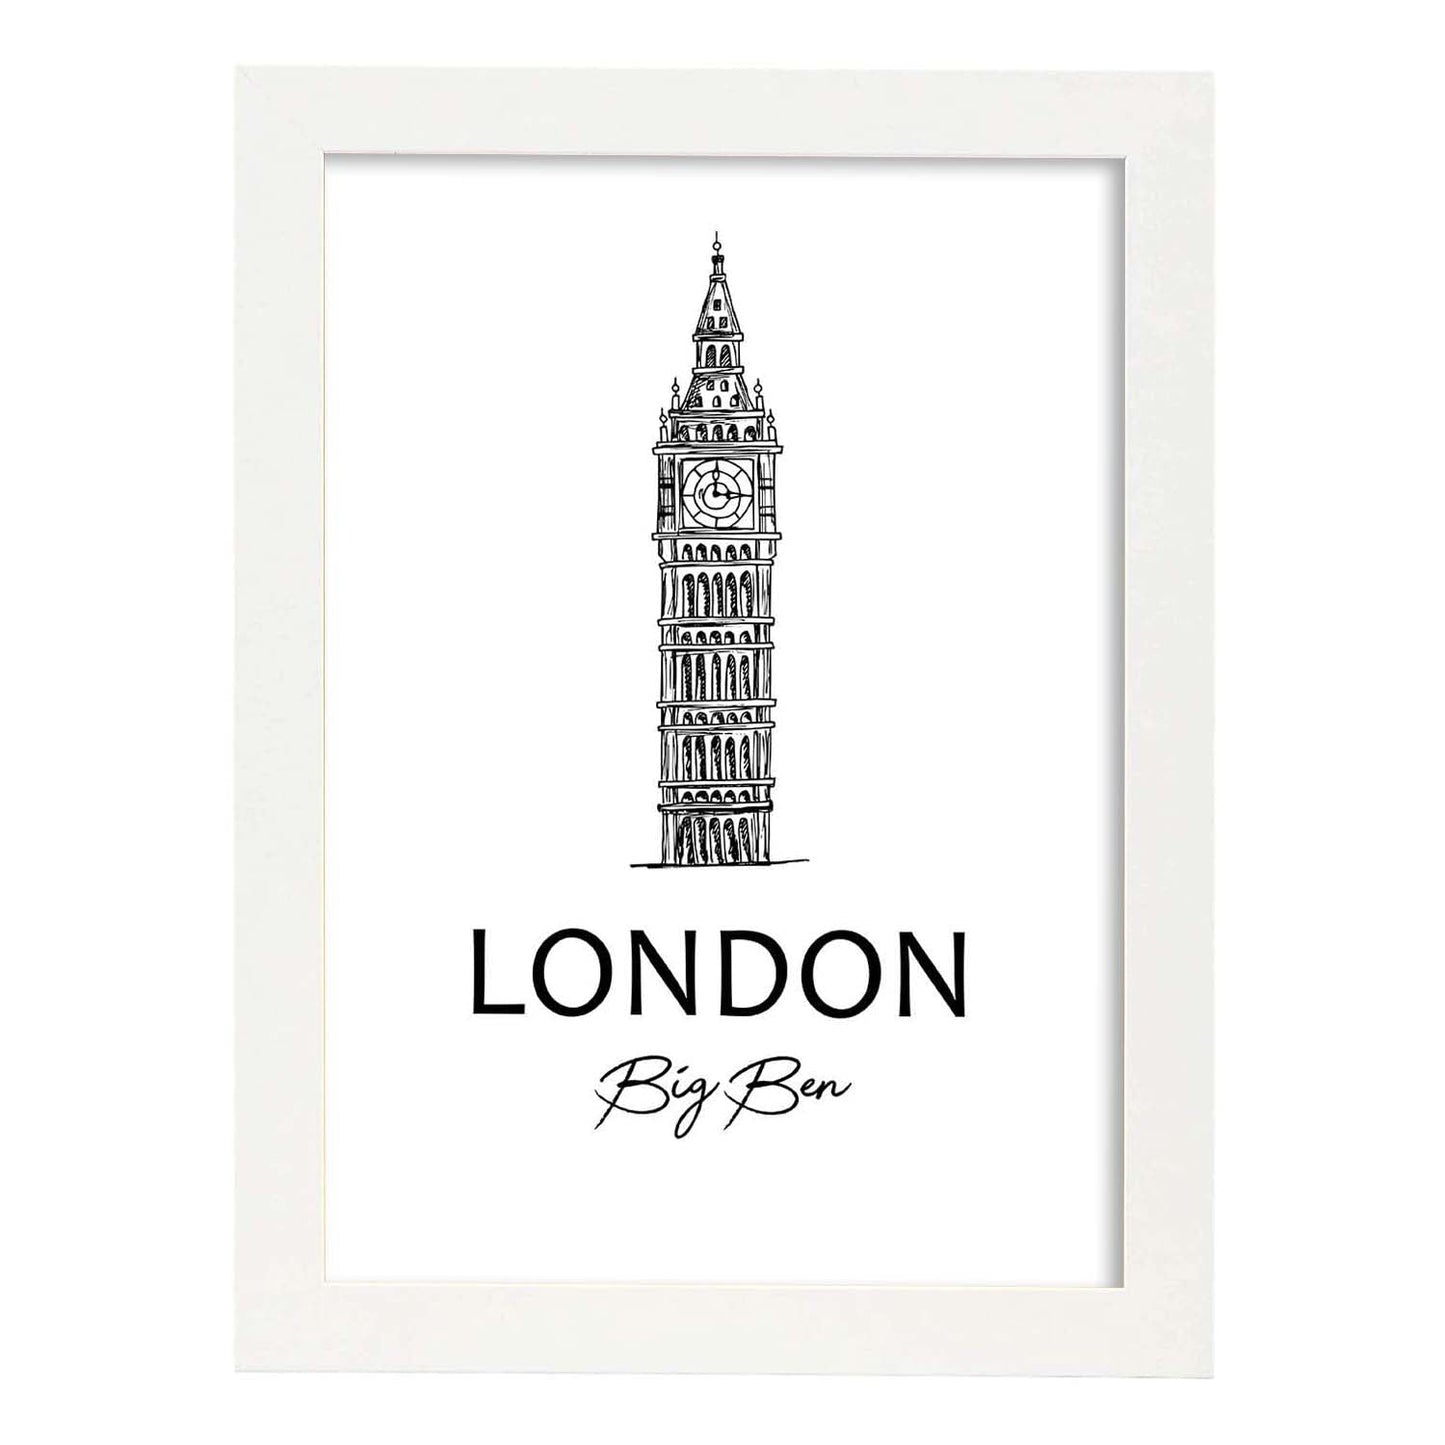 Poster de Londres - Big Ben. Láminas con monumentos de ciudades.-Artwork-Nacnic-A4-Marco Blanco-Nacnic Estudio SL